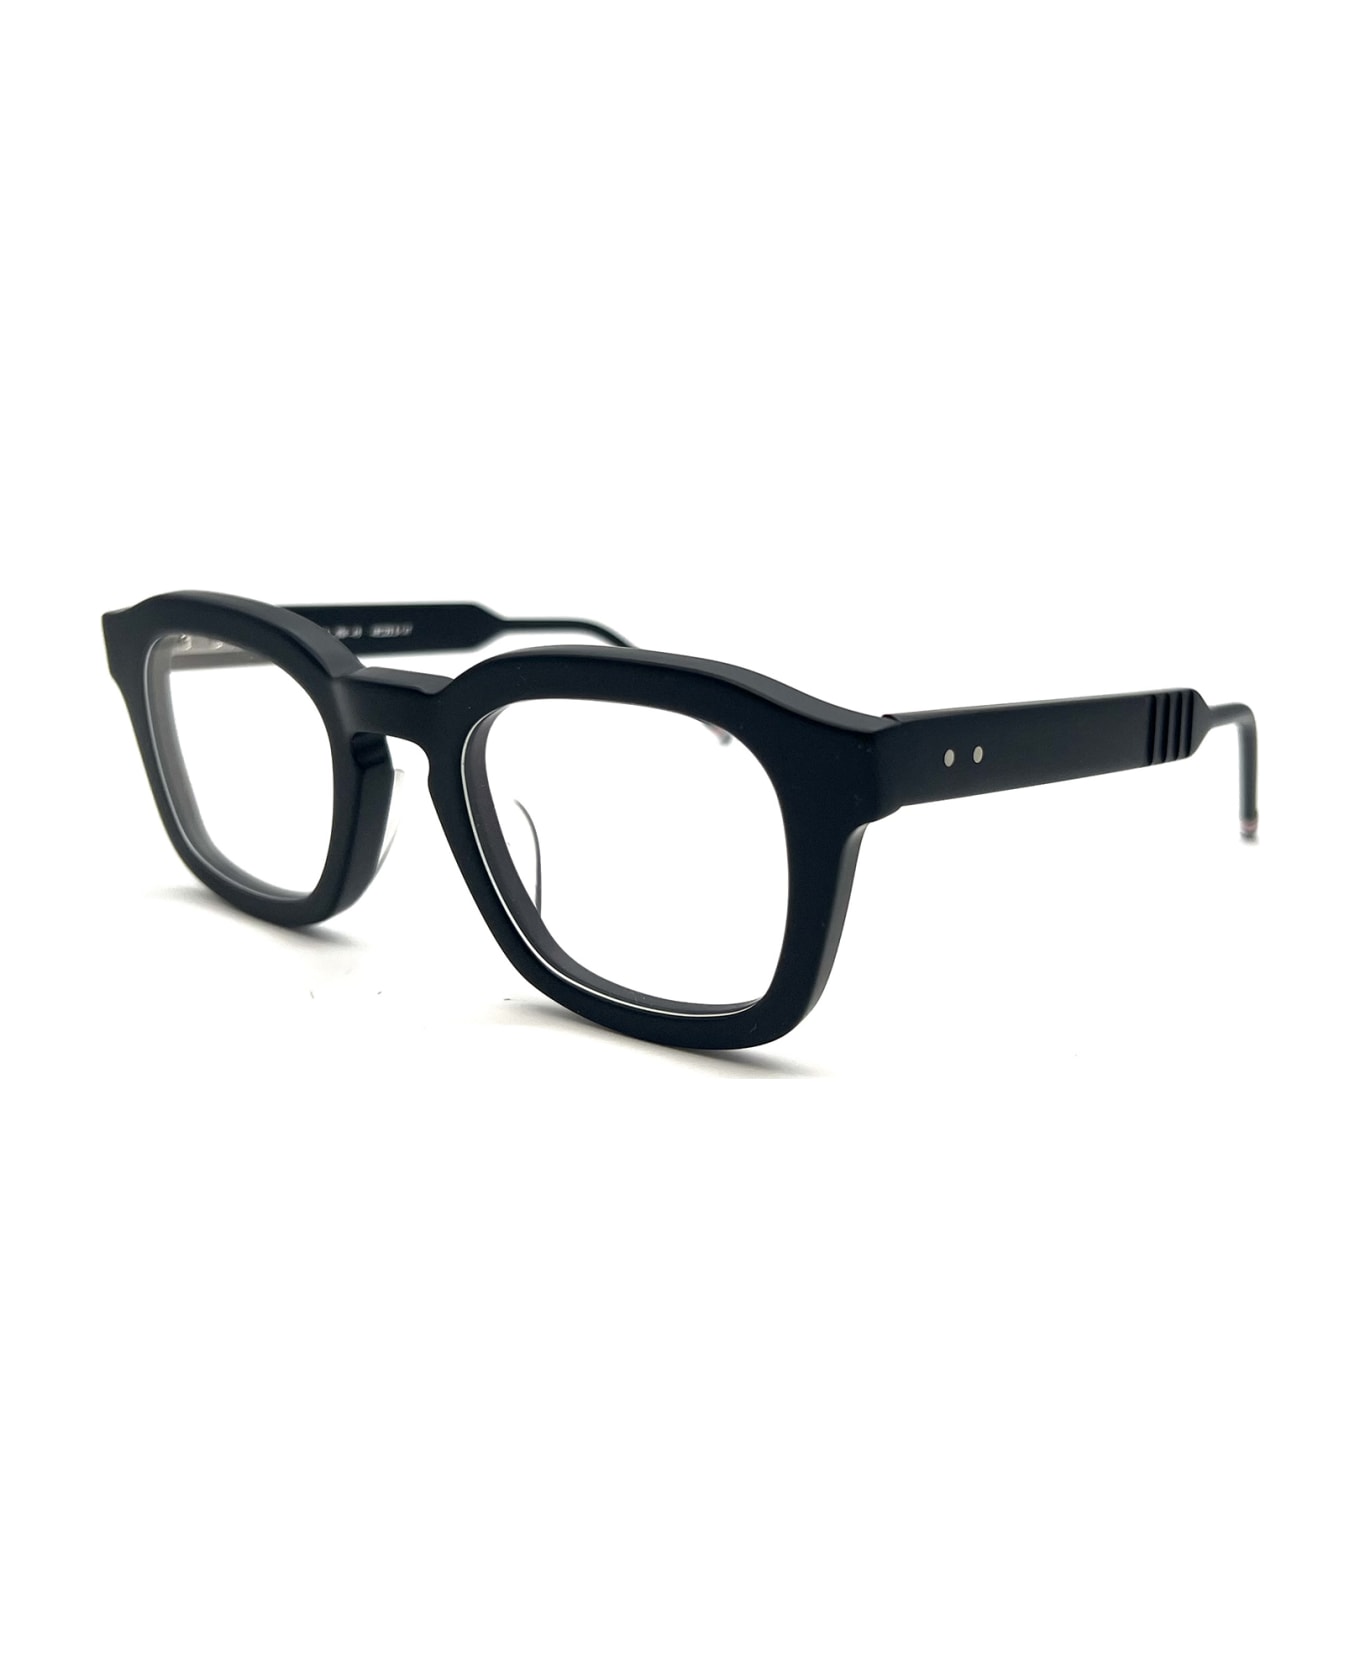 Thom Browne Square Frame Glasses - Black/charcoal アイウェア